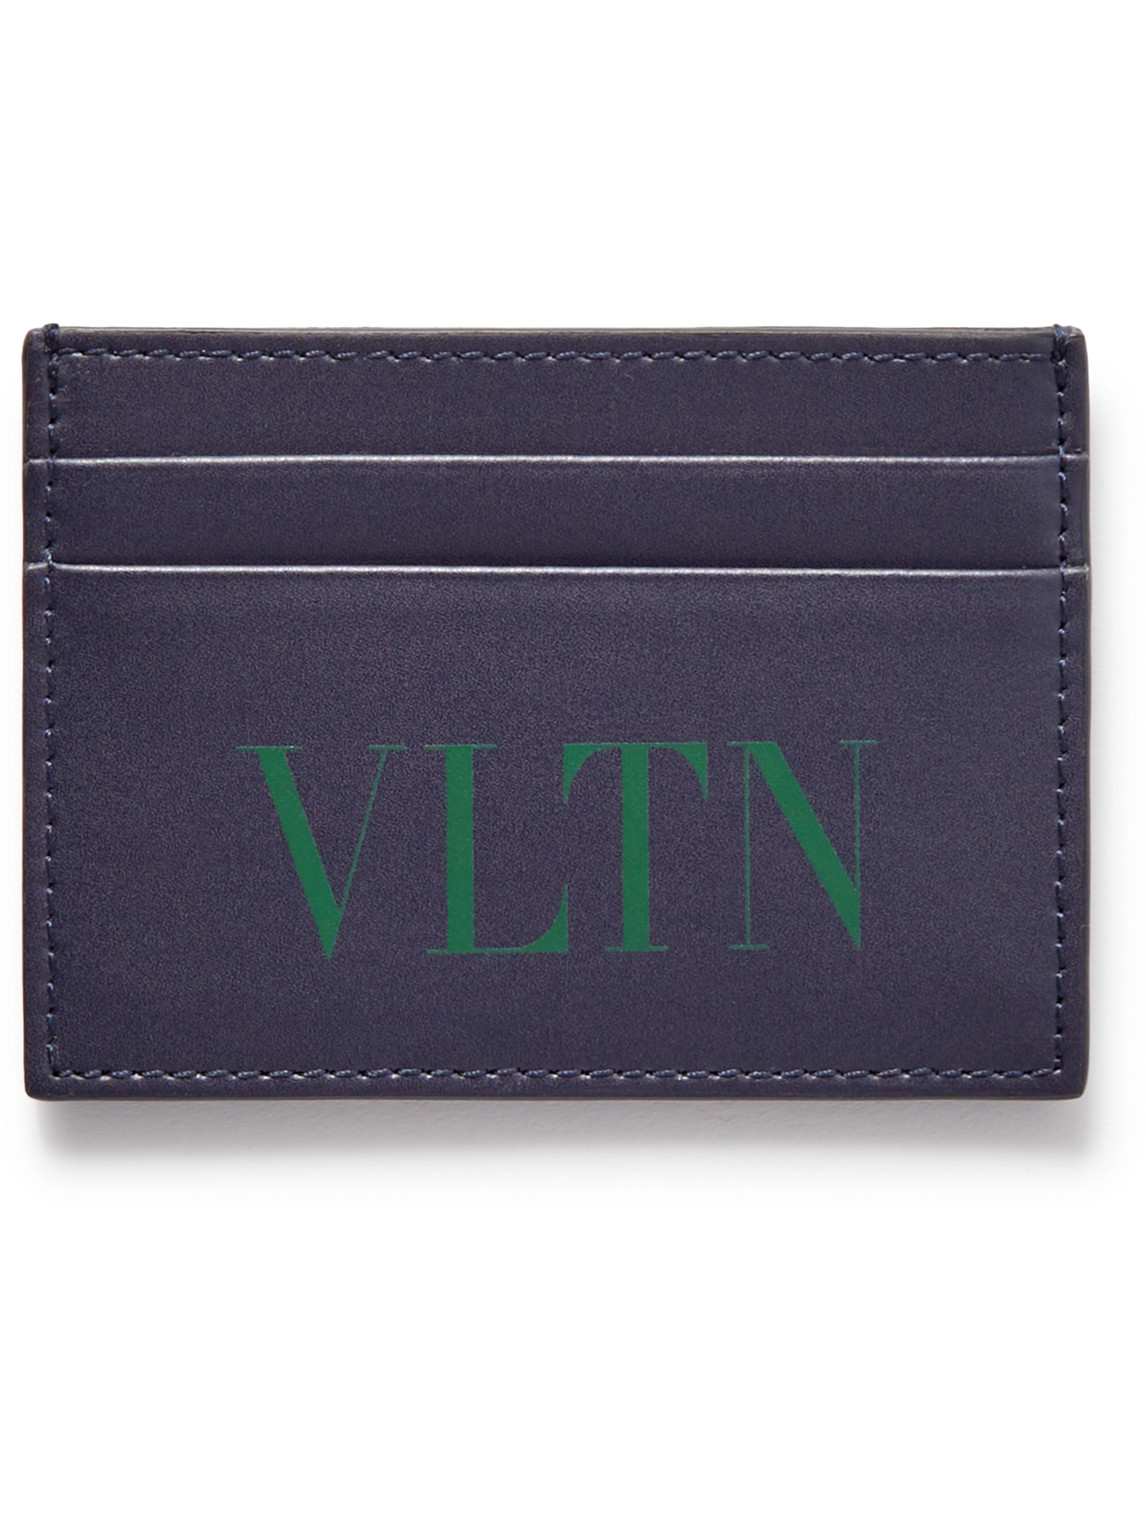 Valentino - Valentino Garavani Logo-Print Leather Cardholder - Men - Blue